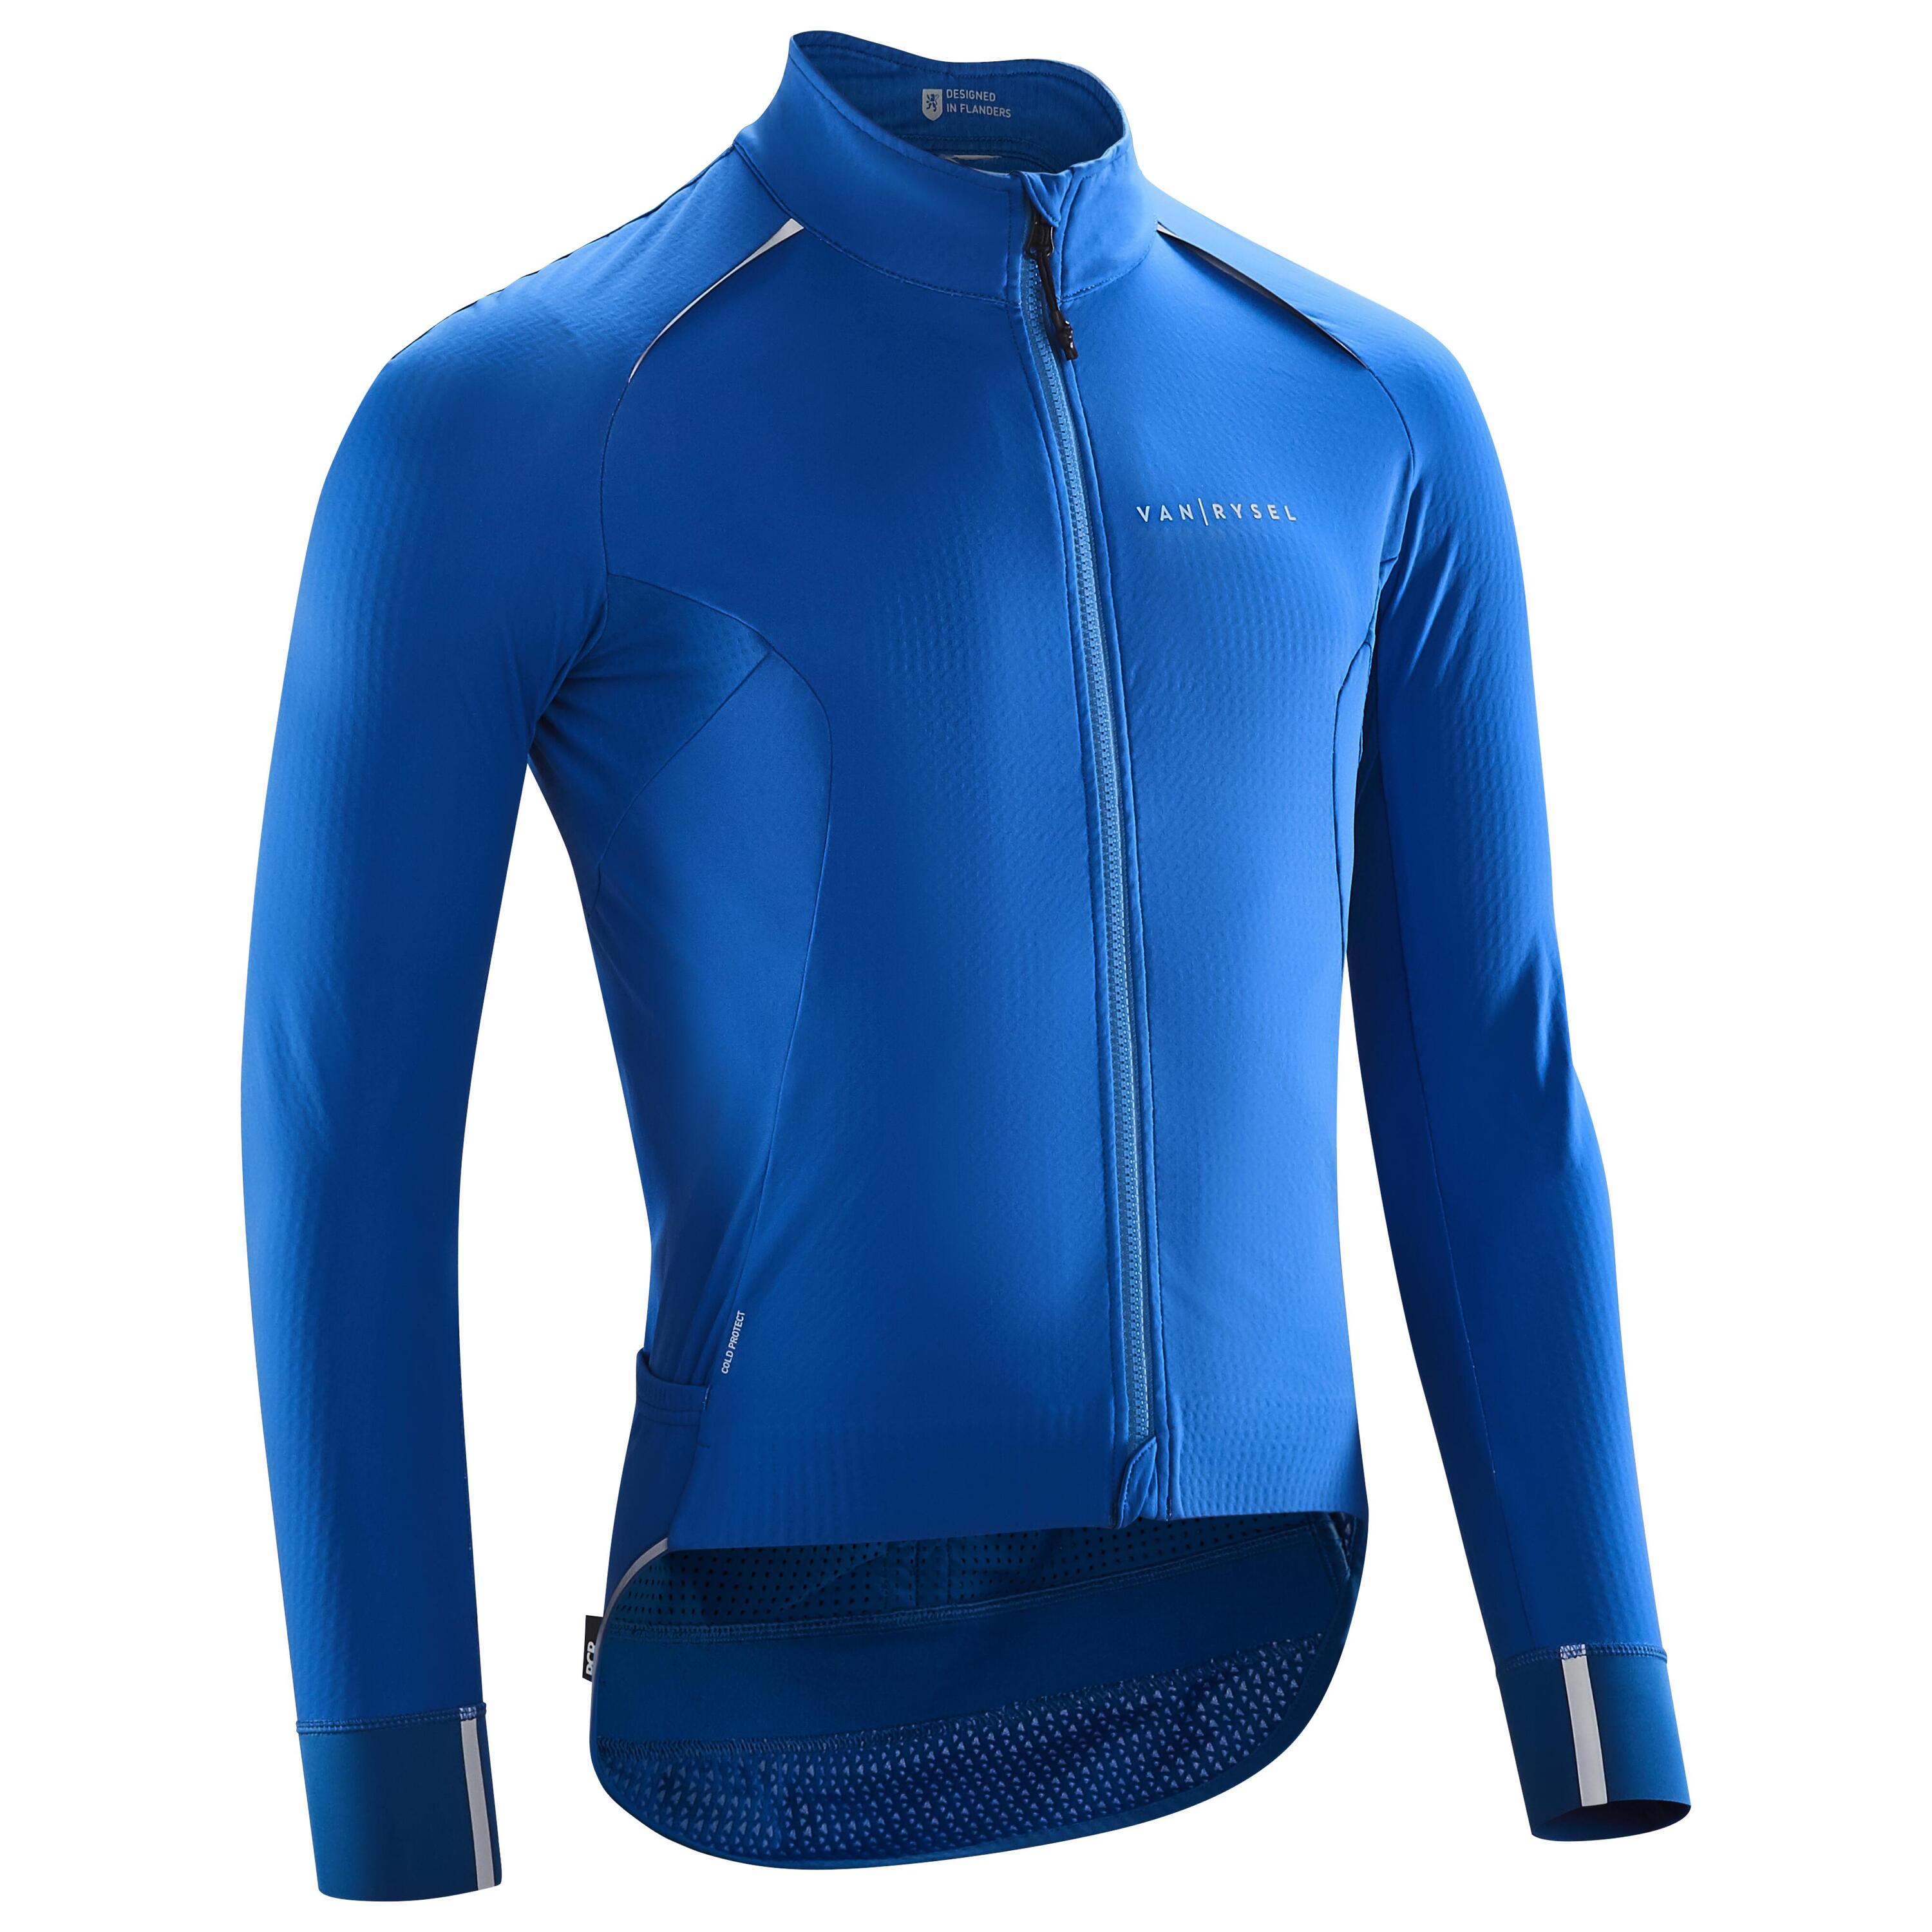 VAN RYSEL Men's Long-Sleeved Road Cycling Winter Jacket Racer - Electric Blue